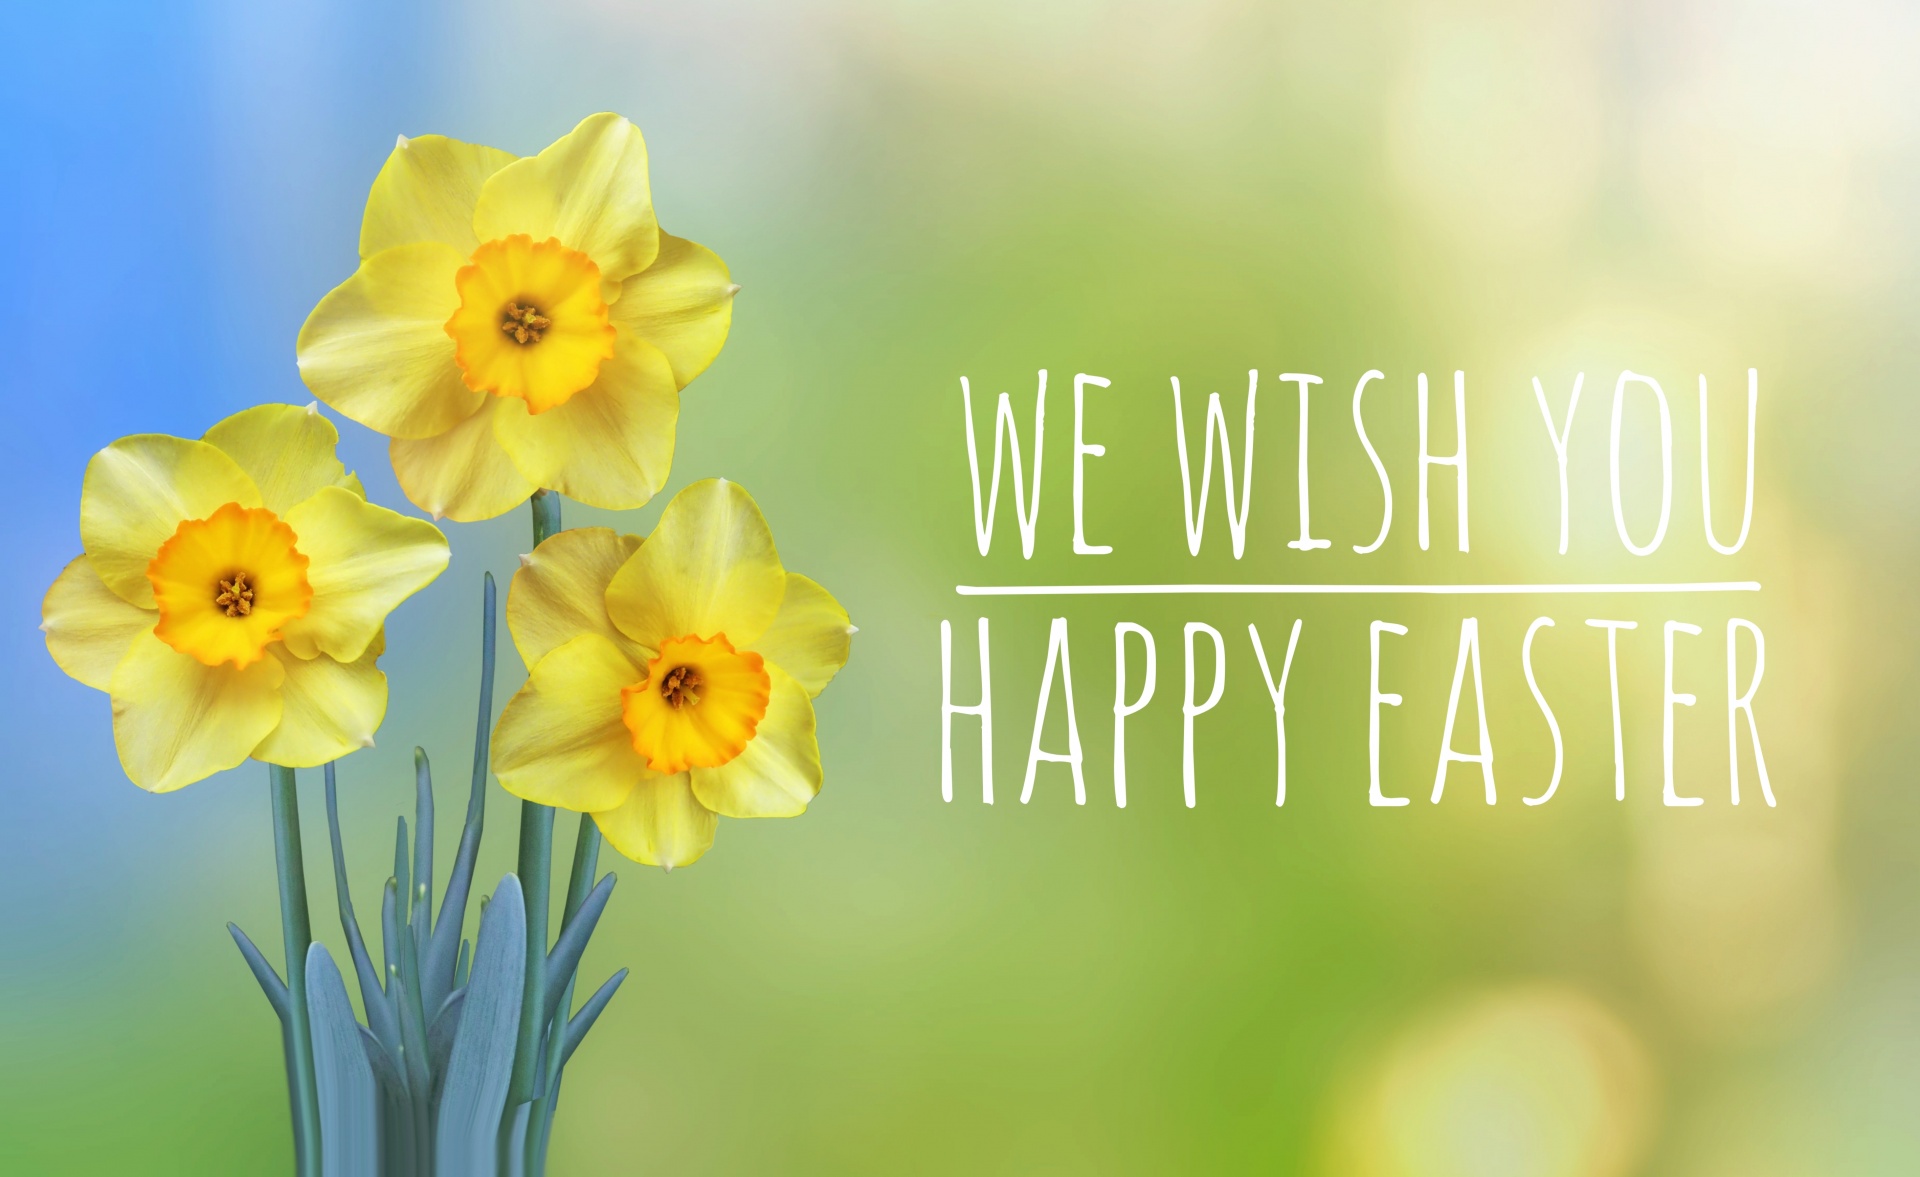 Easter greetings daffodils flowers spring postcard